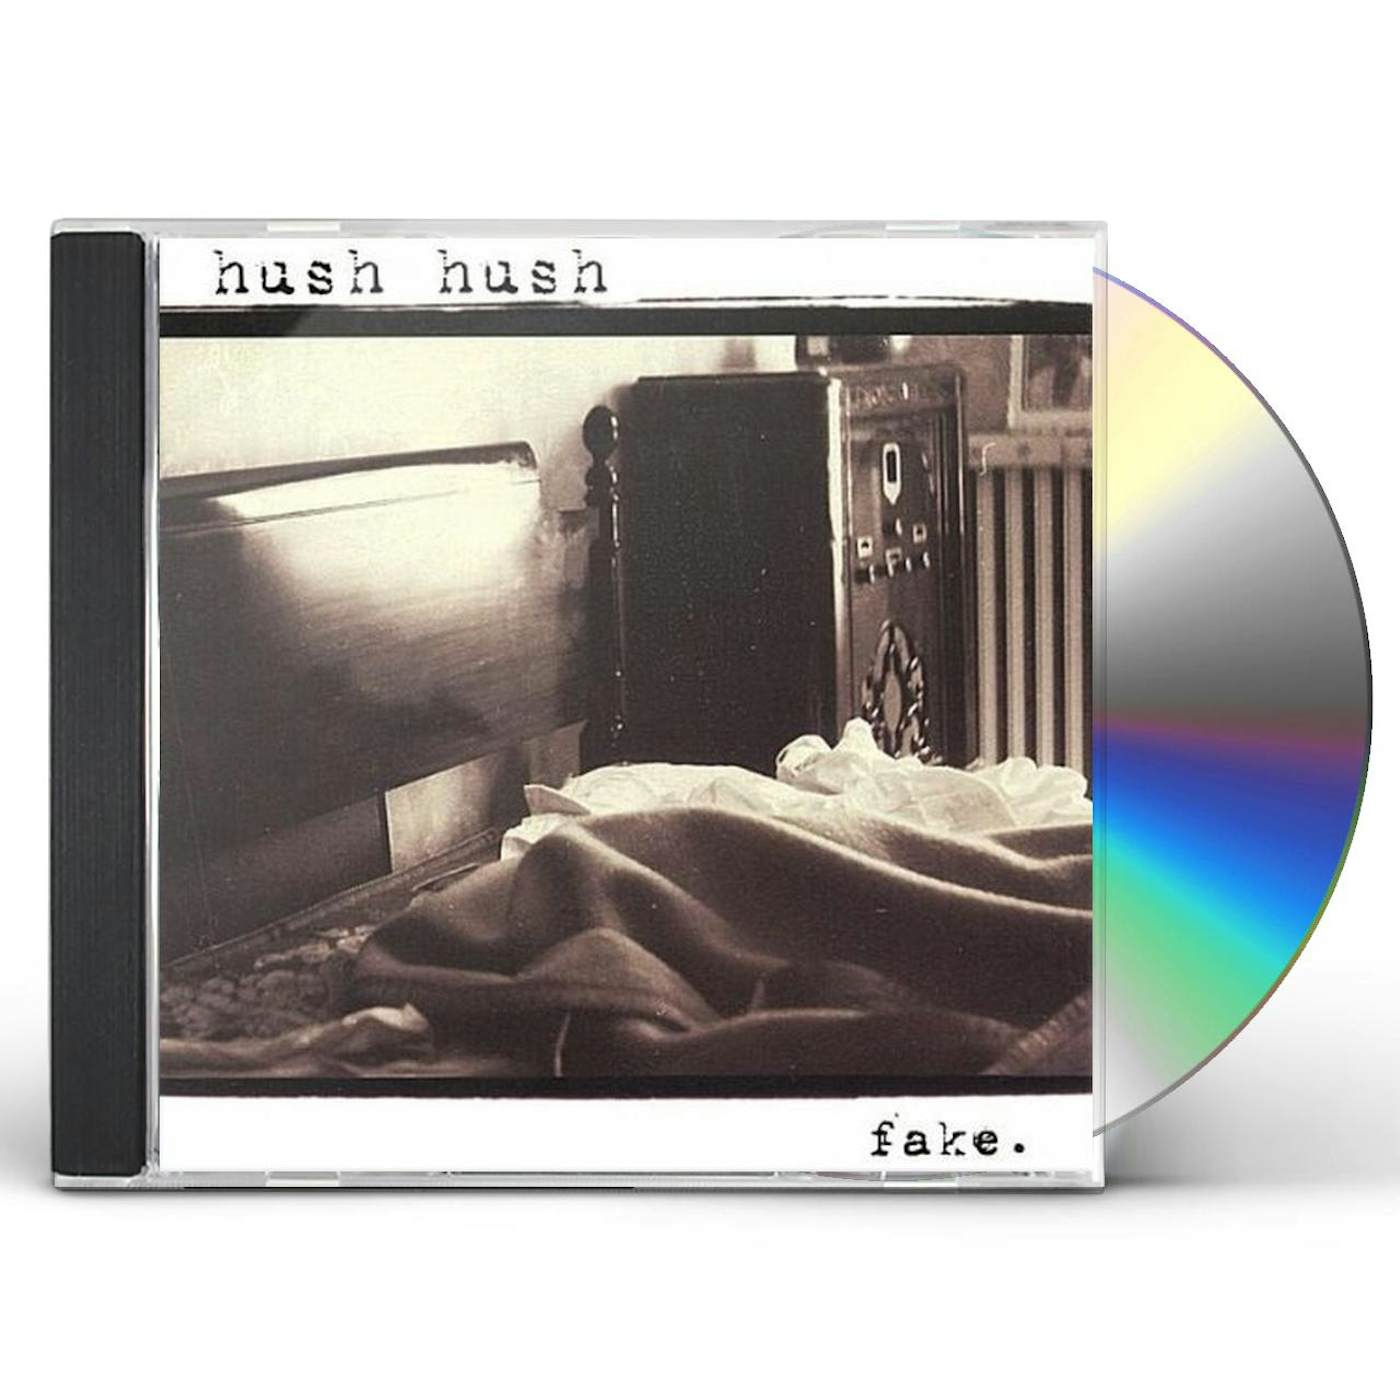 Hush Hush FAKE CD